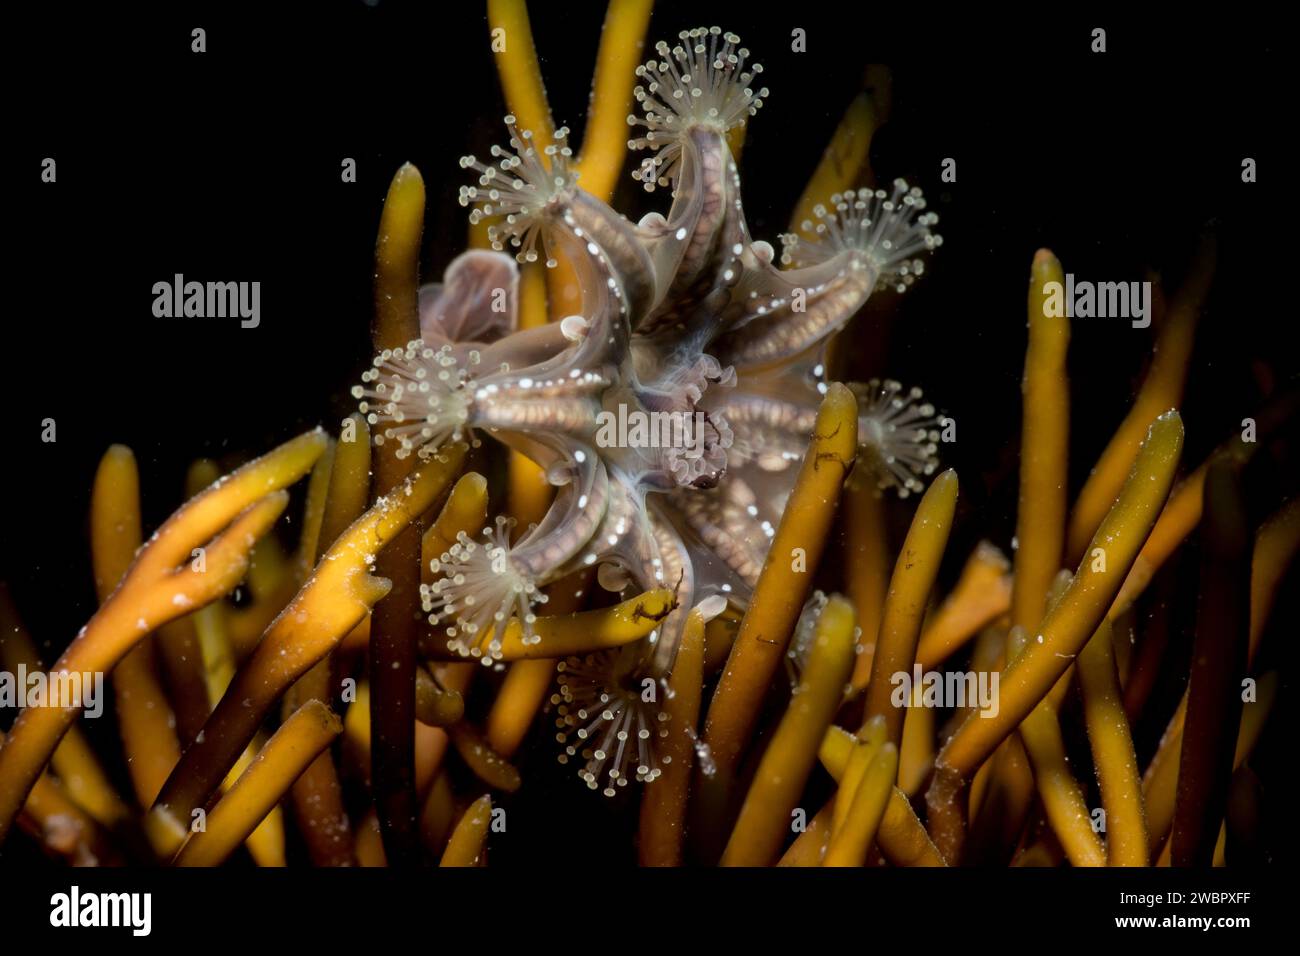 Stalked jellyfish haliclystus Stock Photo